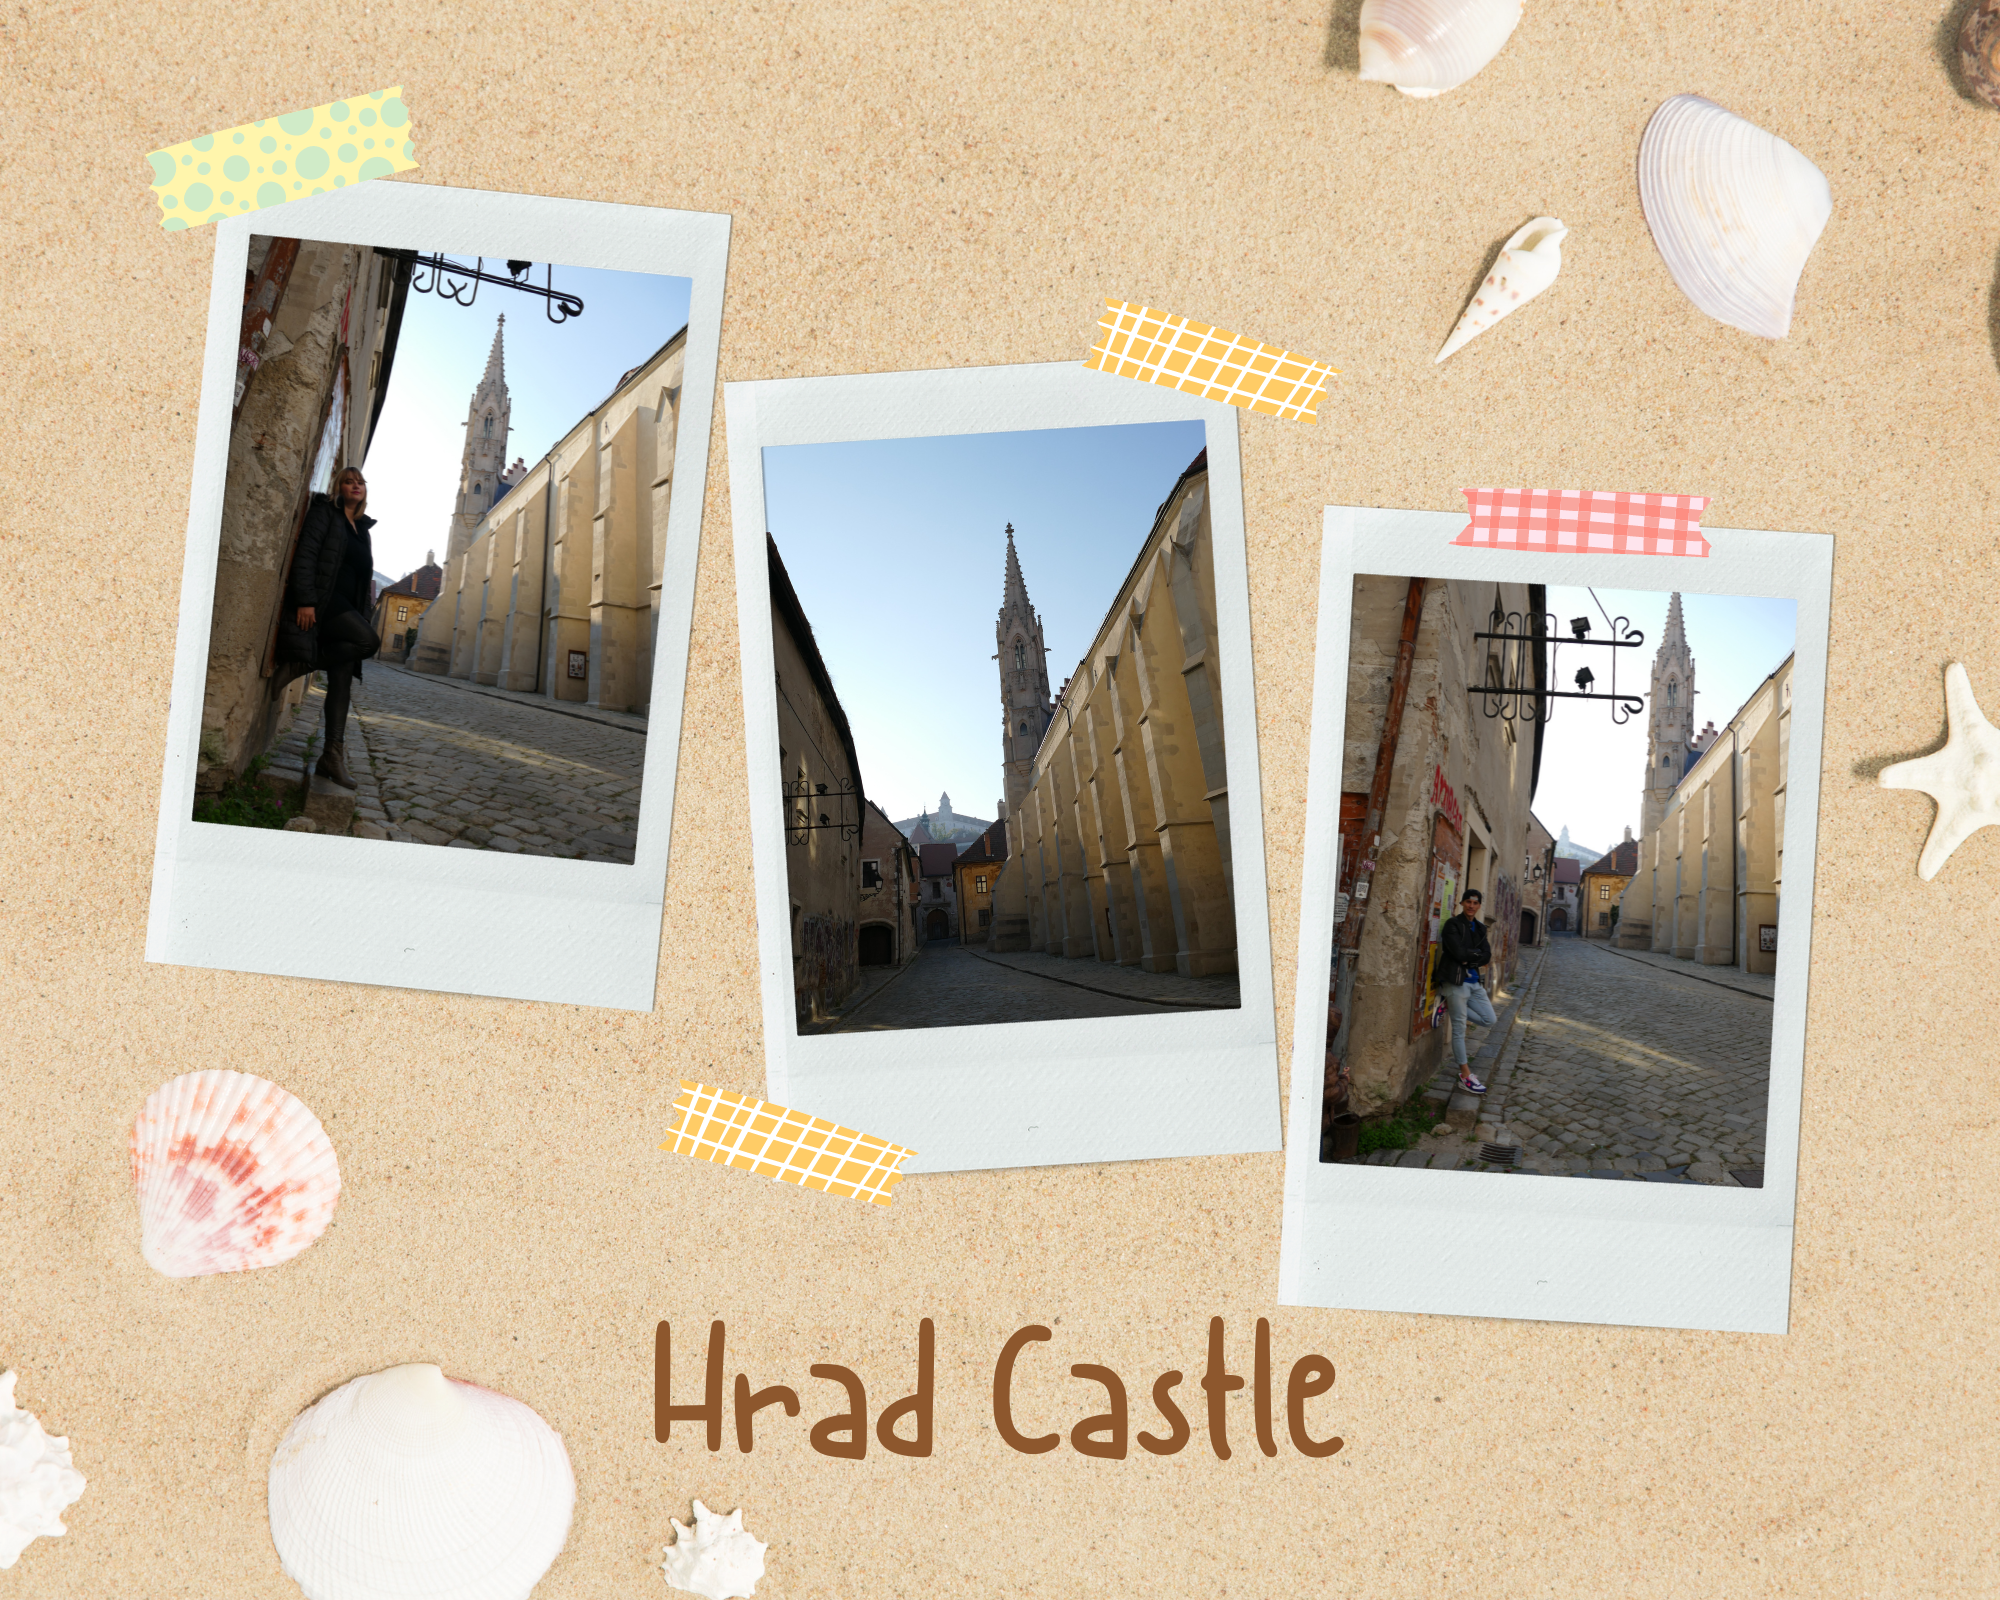 Hrad Castle